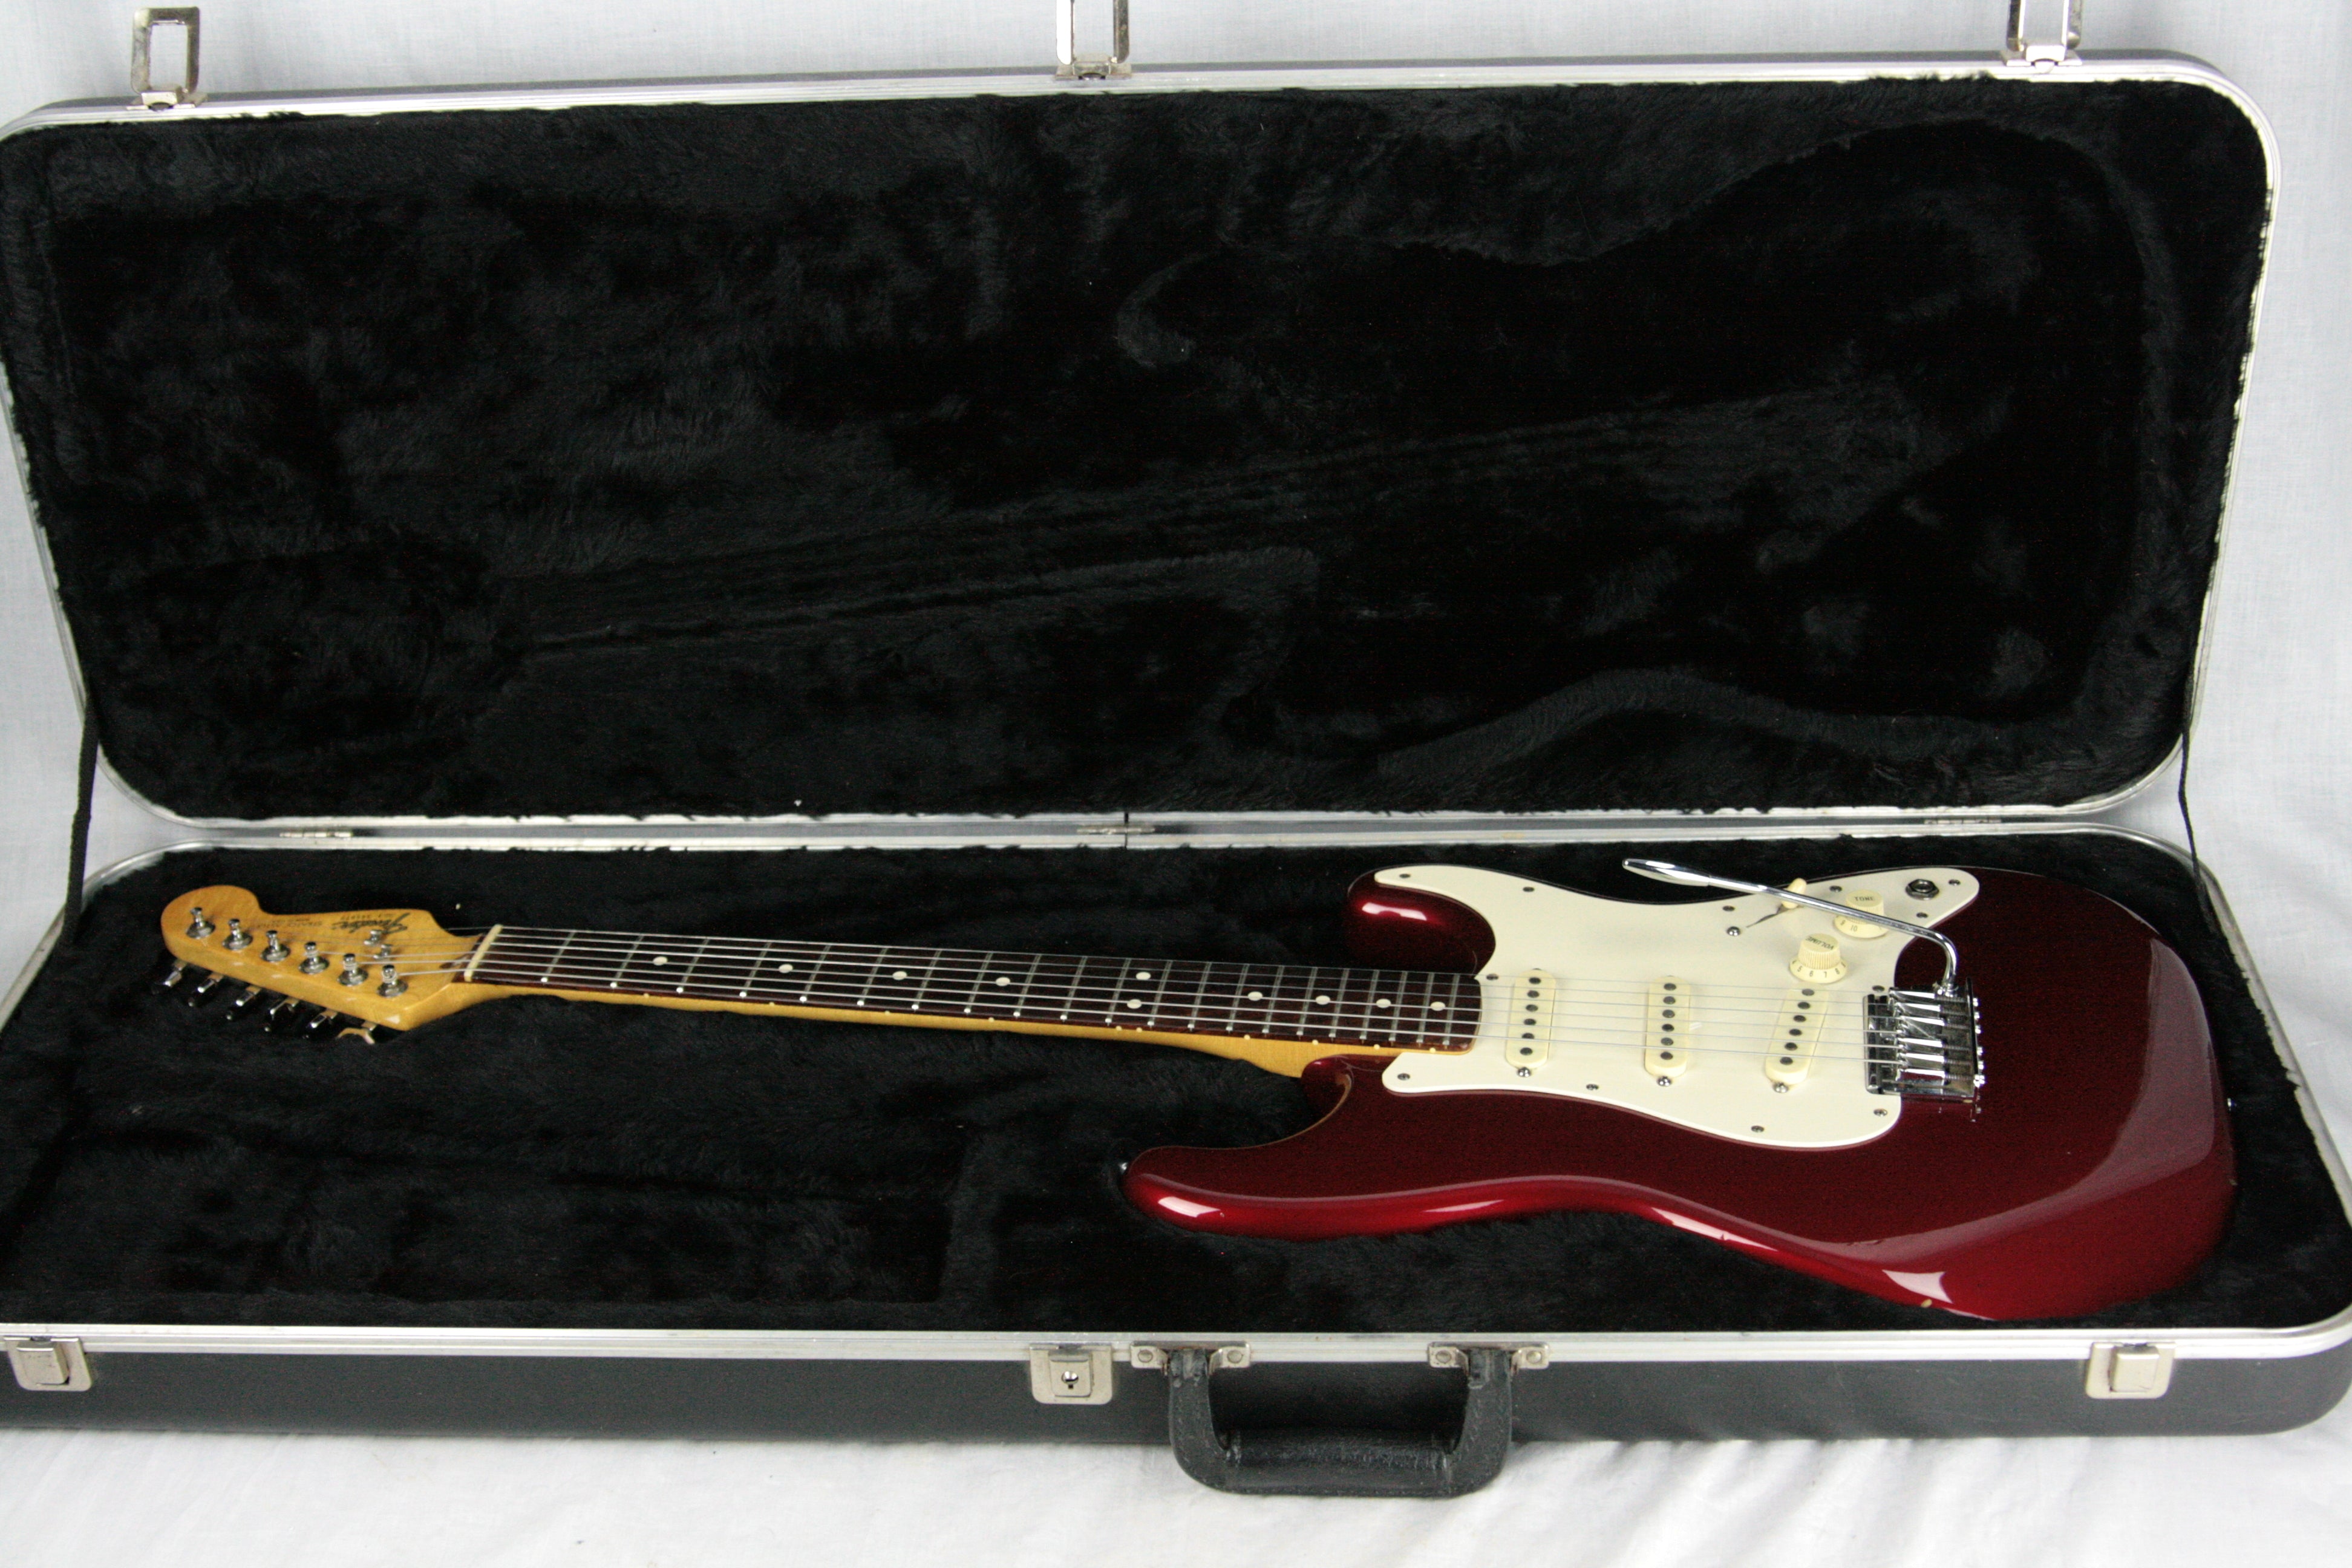 *SOLD*  1983 Fender Stratocaster 2-Knob Dan Smith Era Strat USA American Candy Apple Red